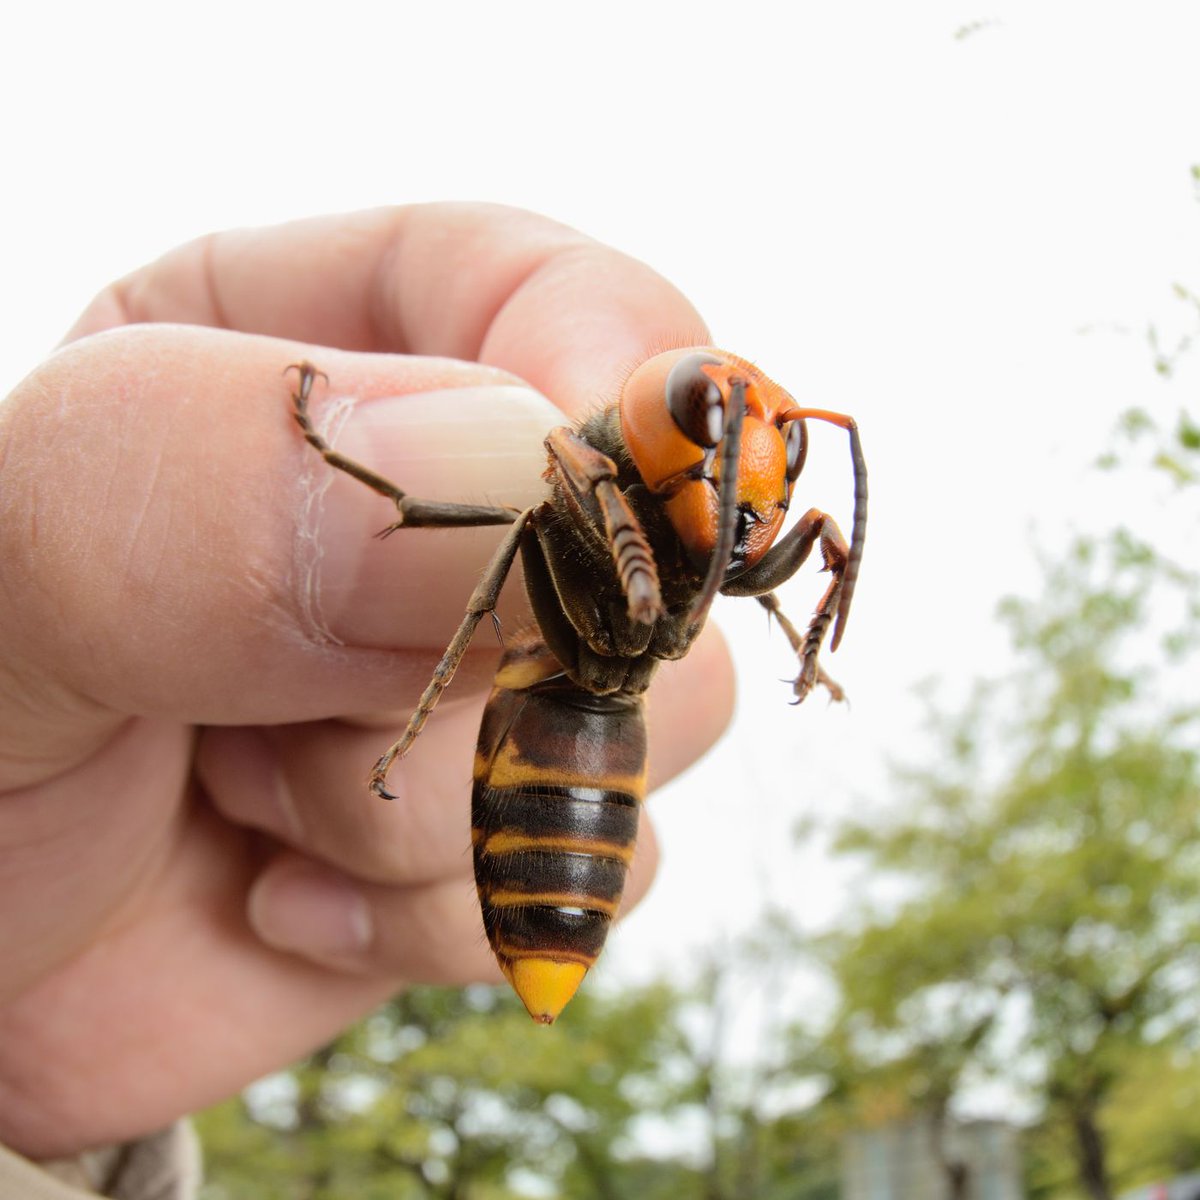 118. Tawon terbesar di dunia, tawon raksasa Asia (Vespa mandarinia), tumbuh hingga sebesar 4,5 cm. https://www.vox.com/2020/5/3/21245612/murder-hornets-asian-giant-hornet-bees